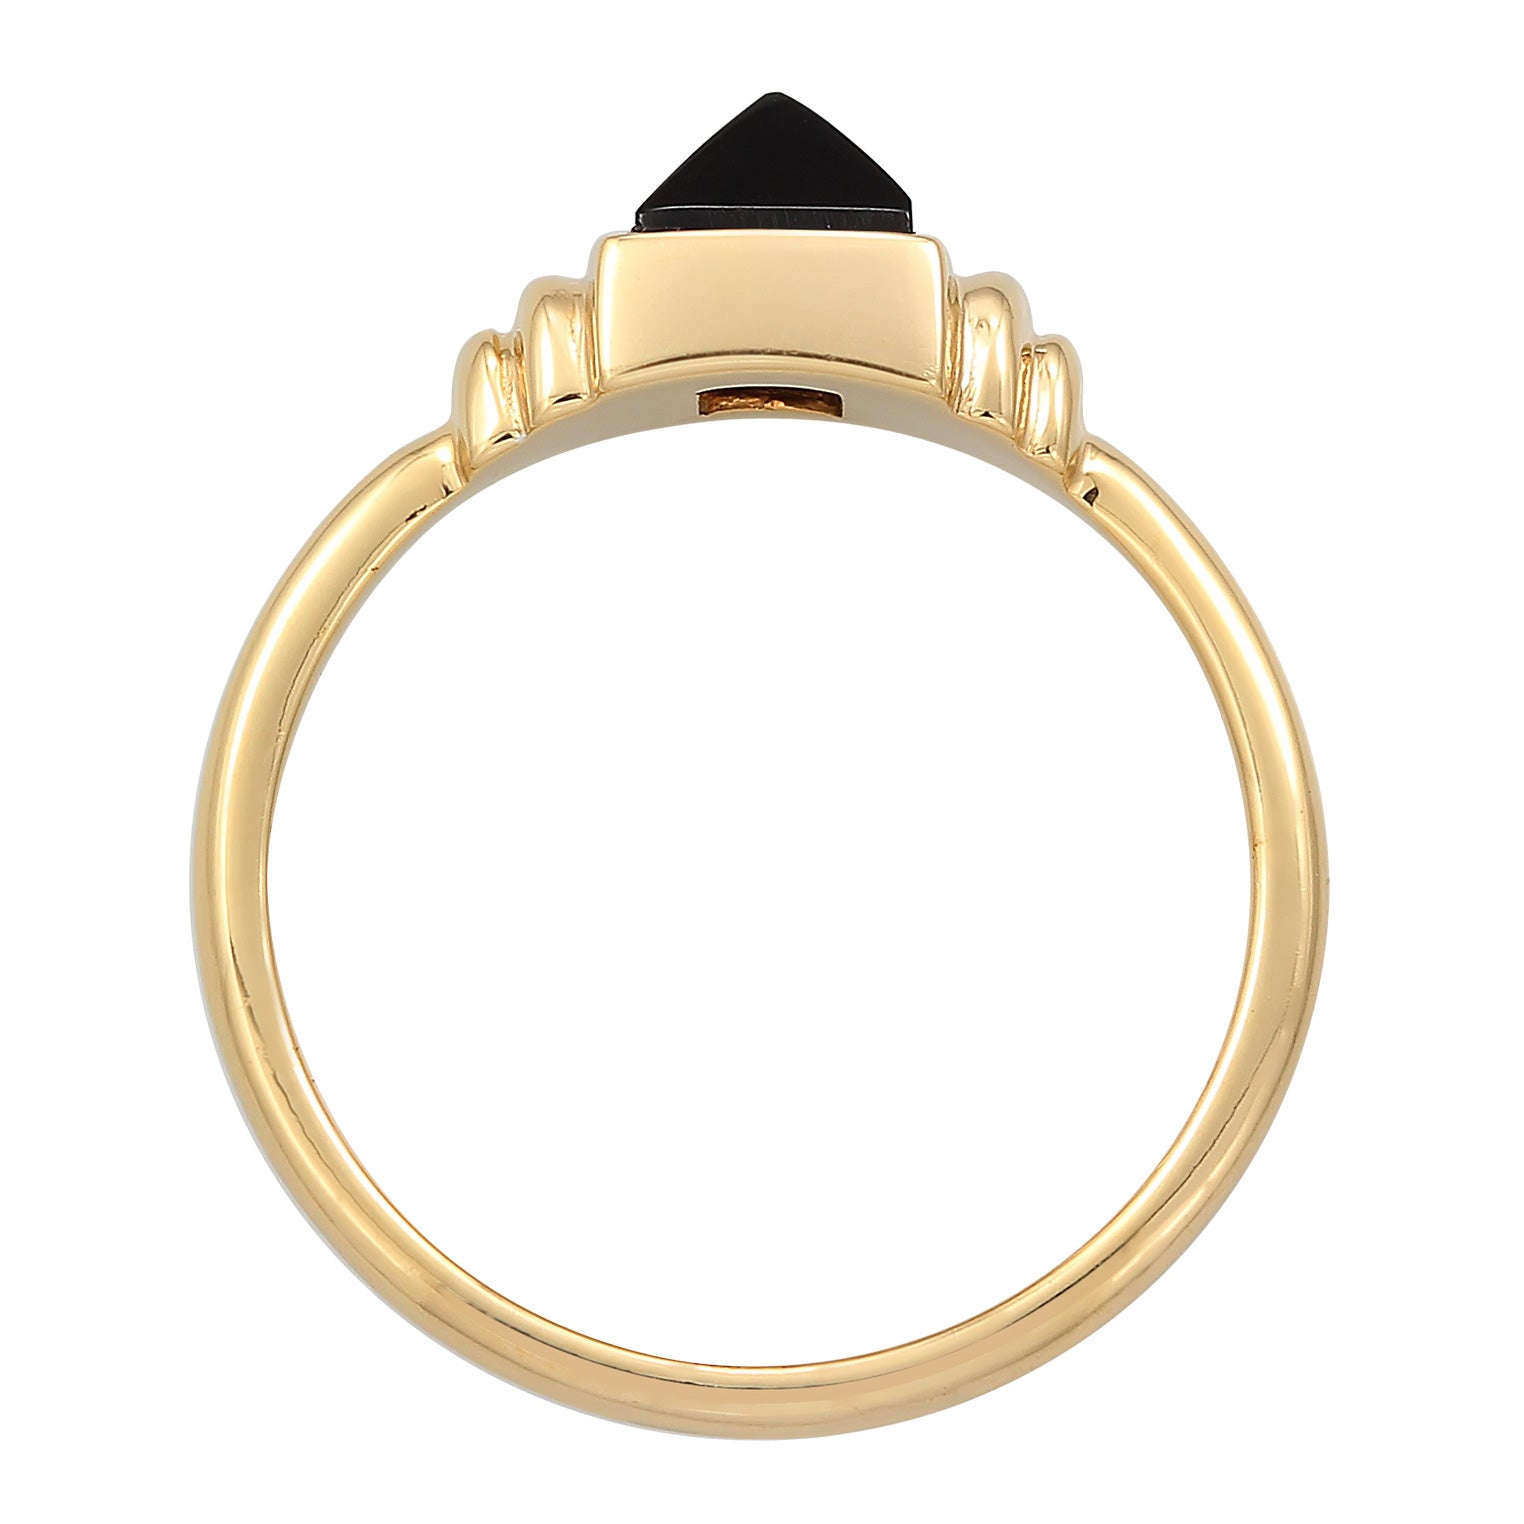 Gold - Elli PREMIUM | Solitär-Ring Quadrat | Onyx (Schwarz) | 925er Sterling Silber